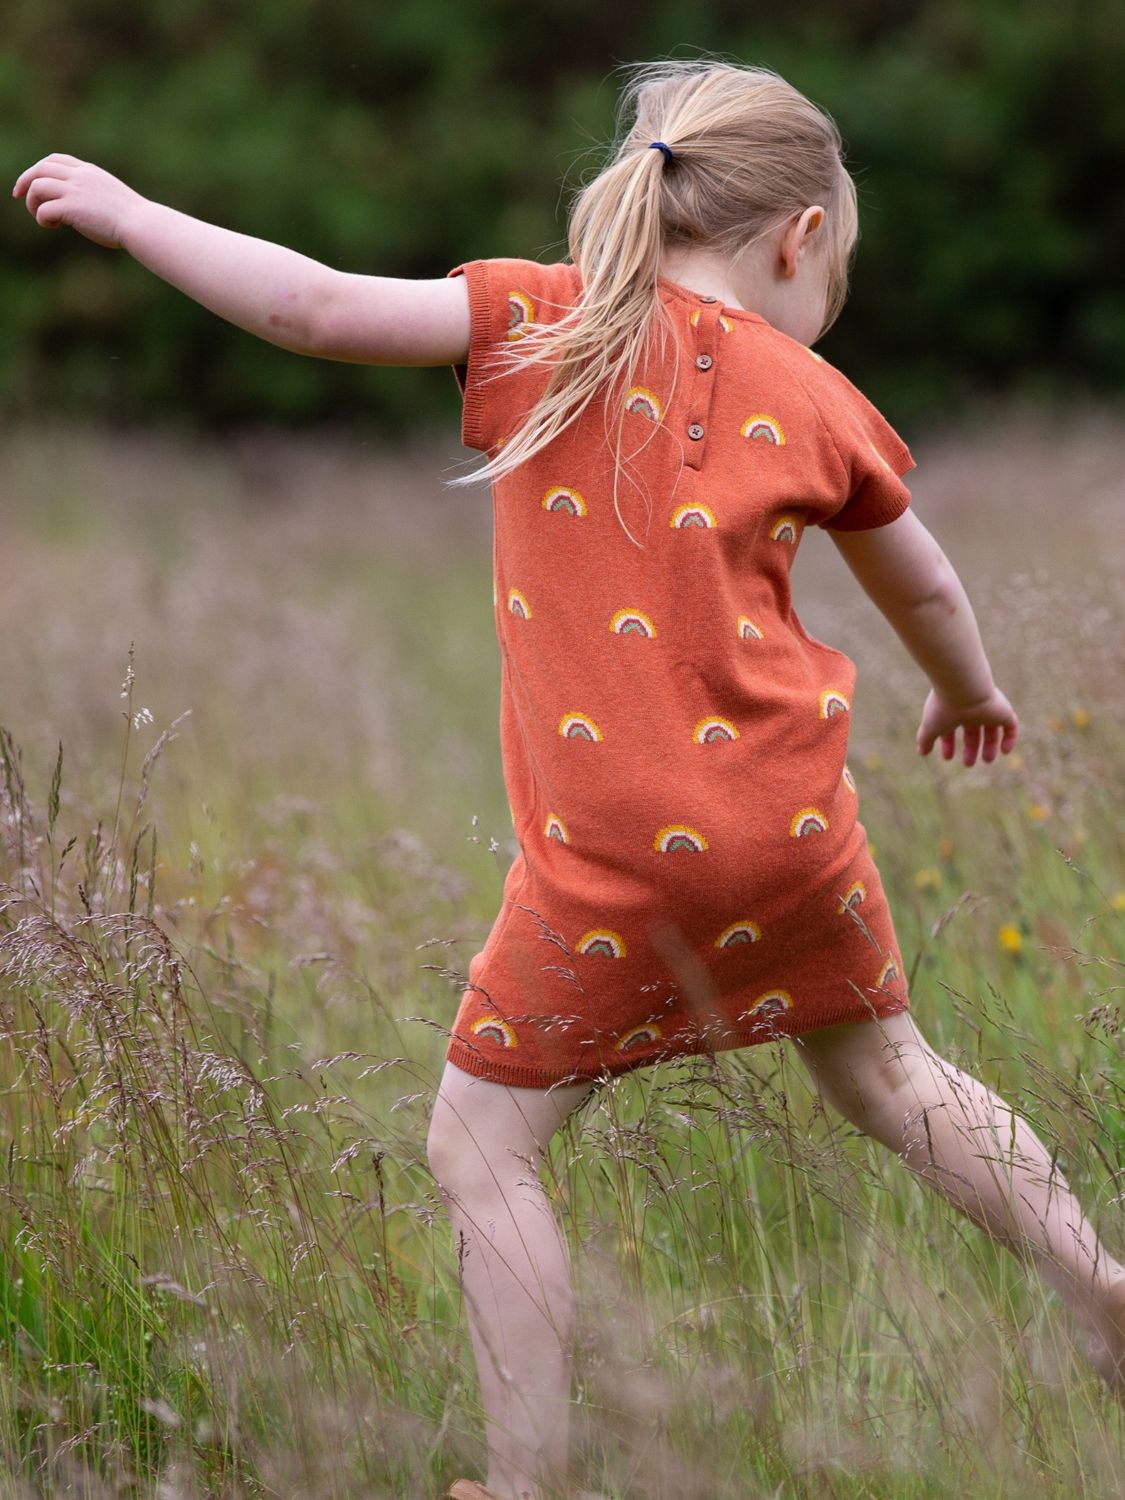 Buy Little Green Radicals Kids' Rainbow Short Sleeve Knitted Tunic Dress, Walnut Online at johnlewis.com